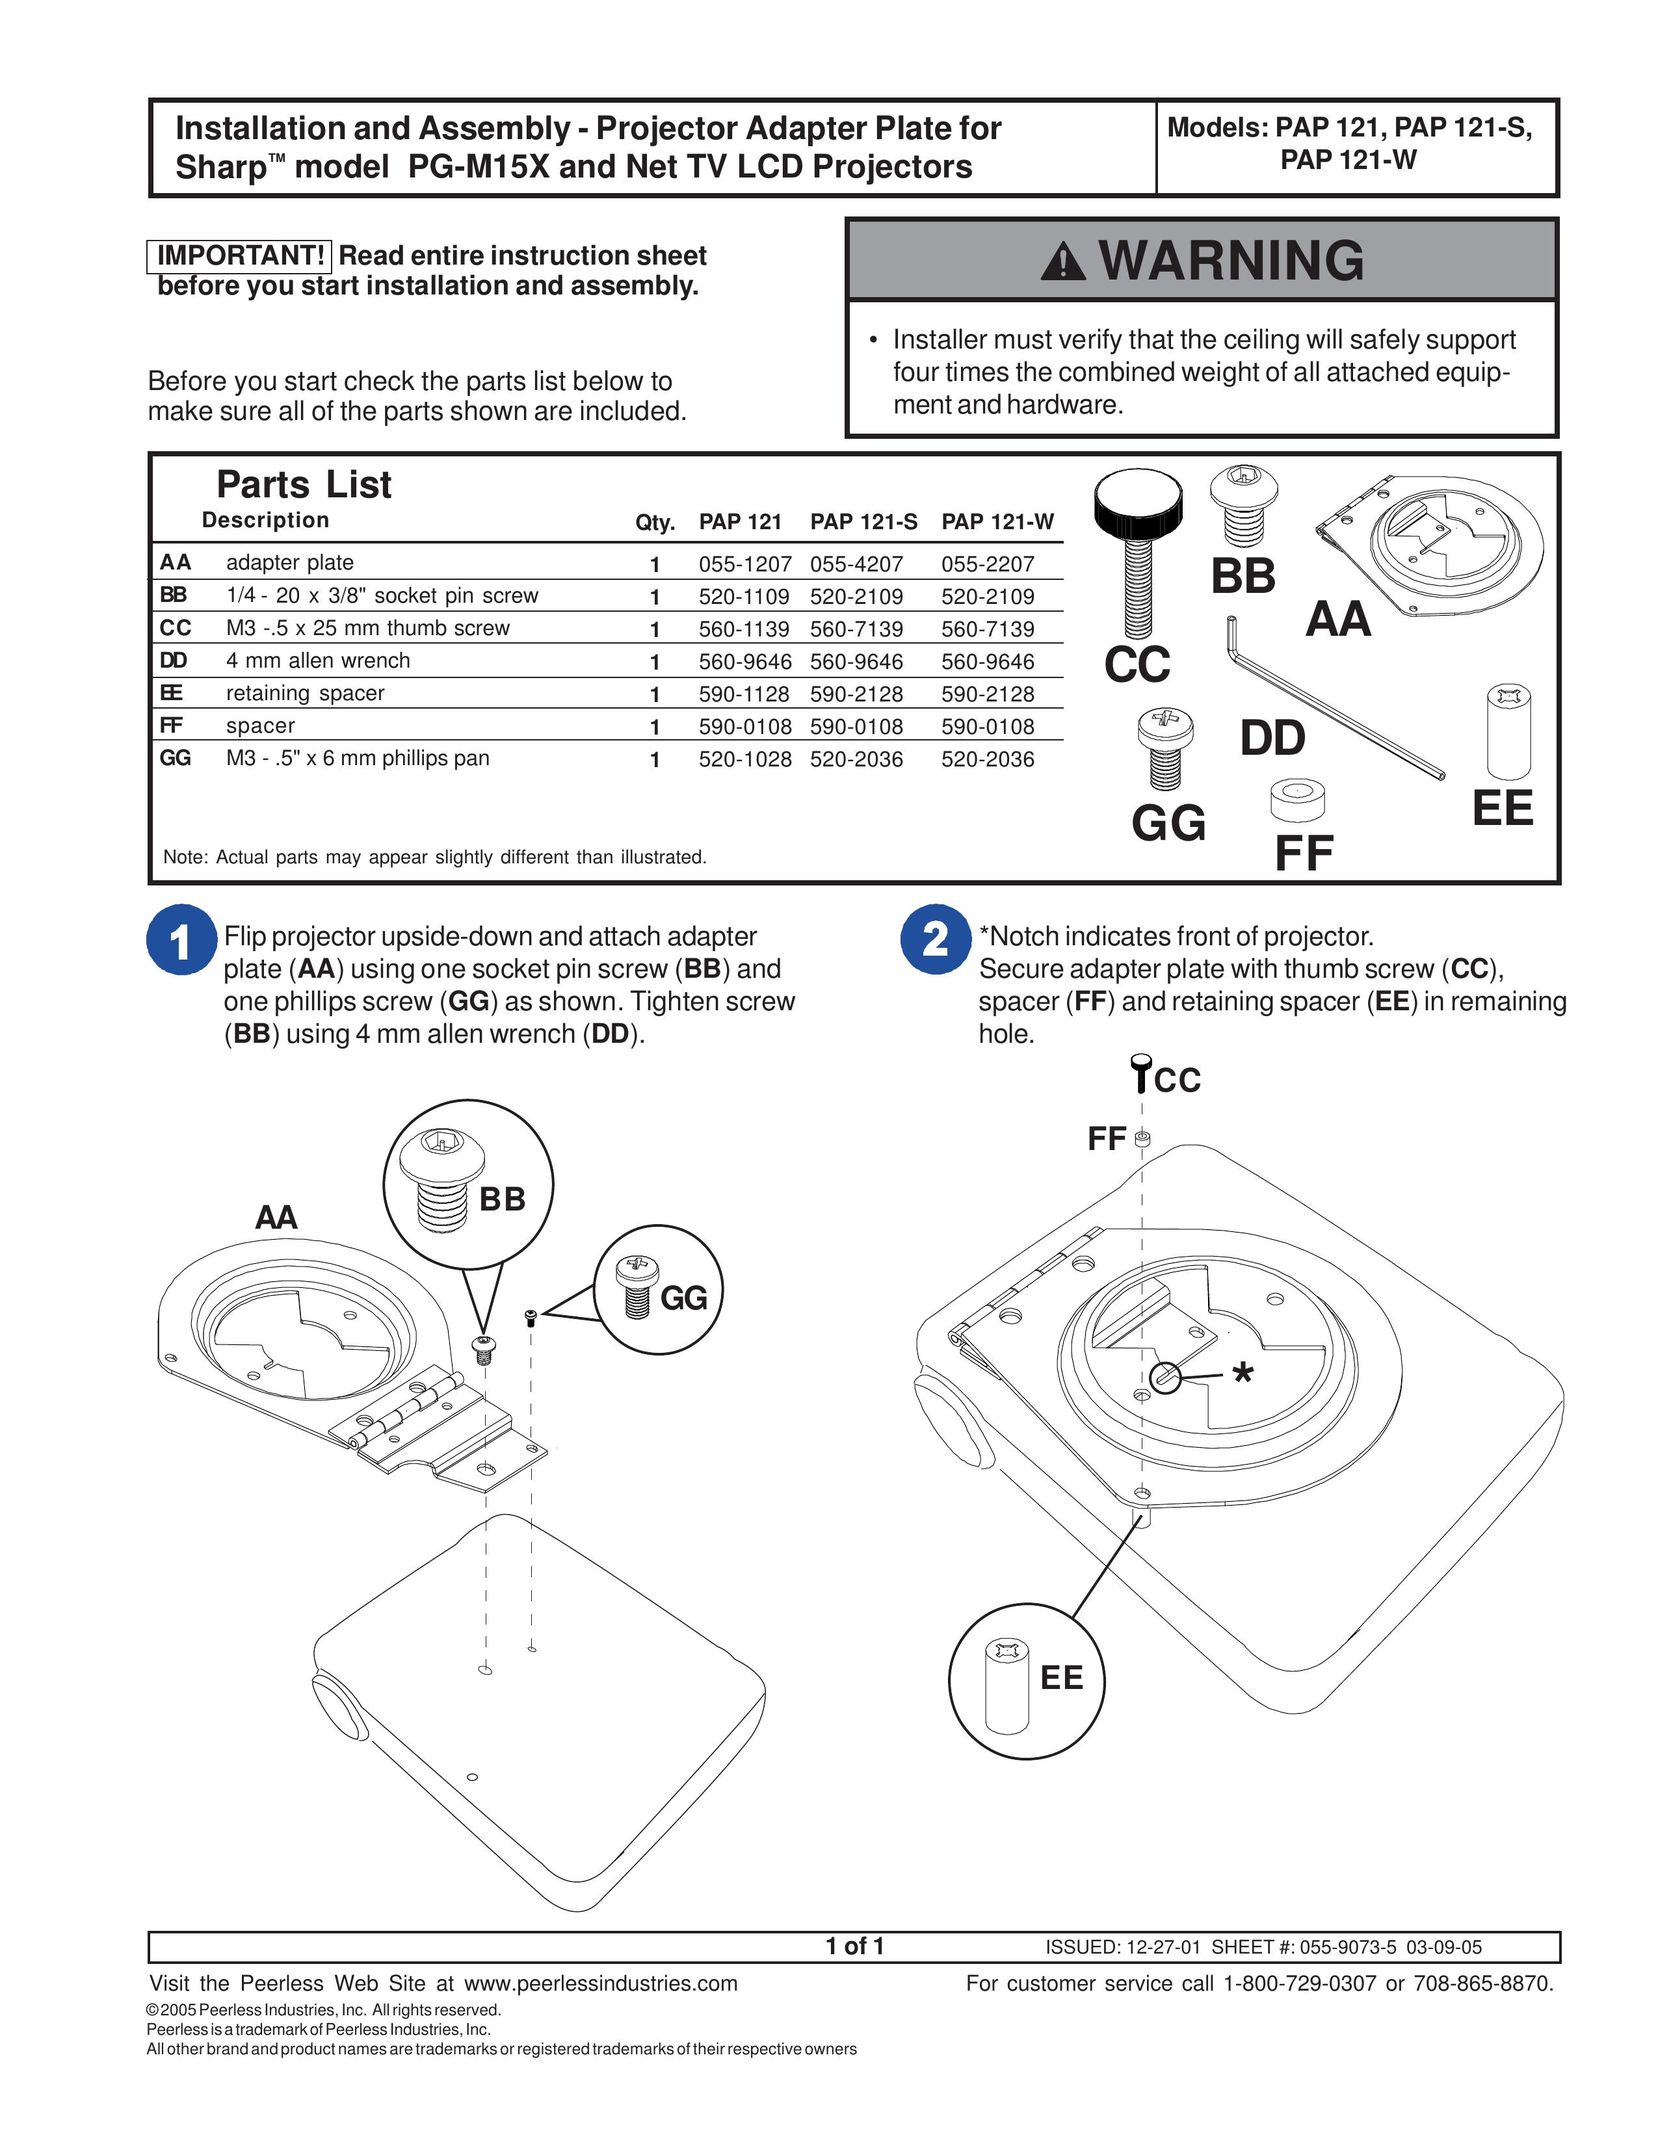 Peerless Industries PAP 121-W Projector Accessories User Manual